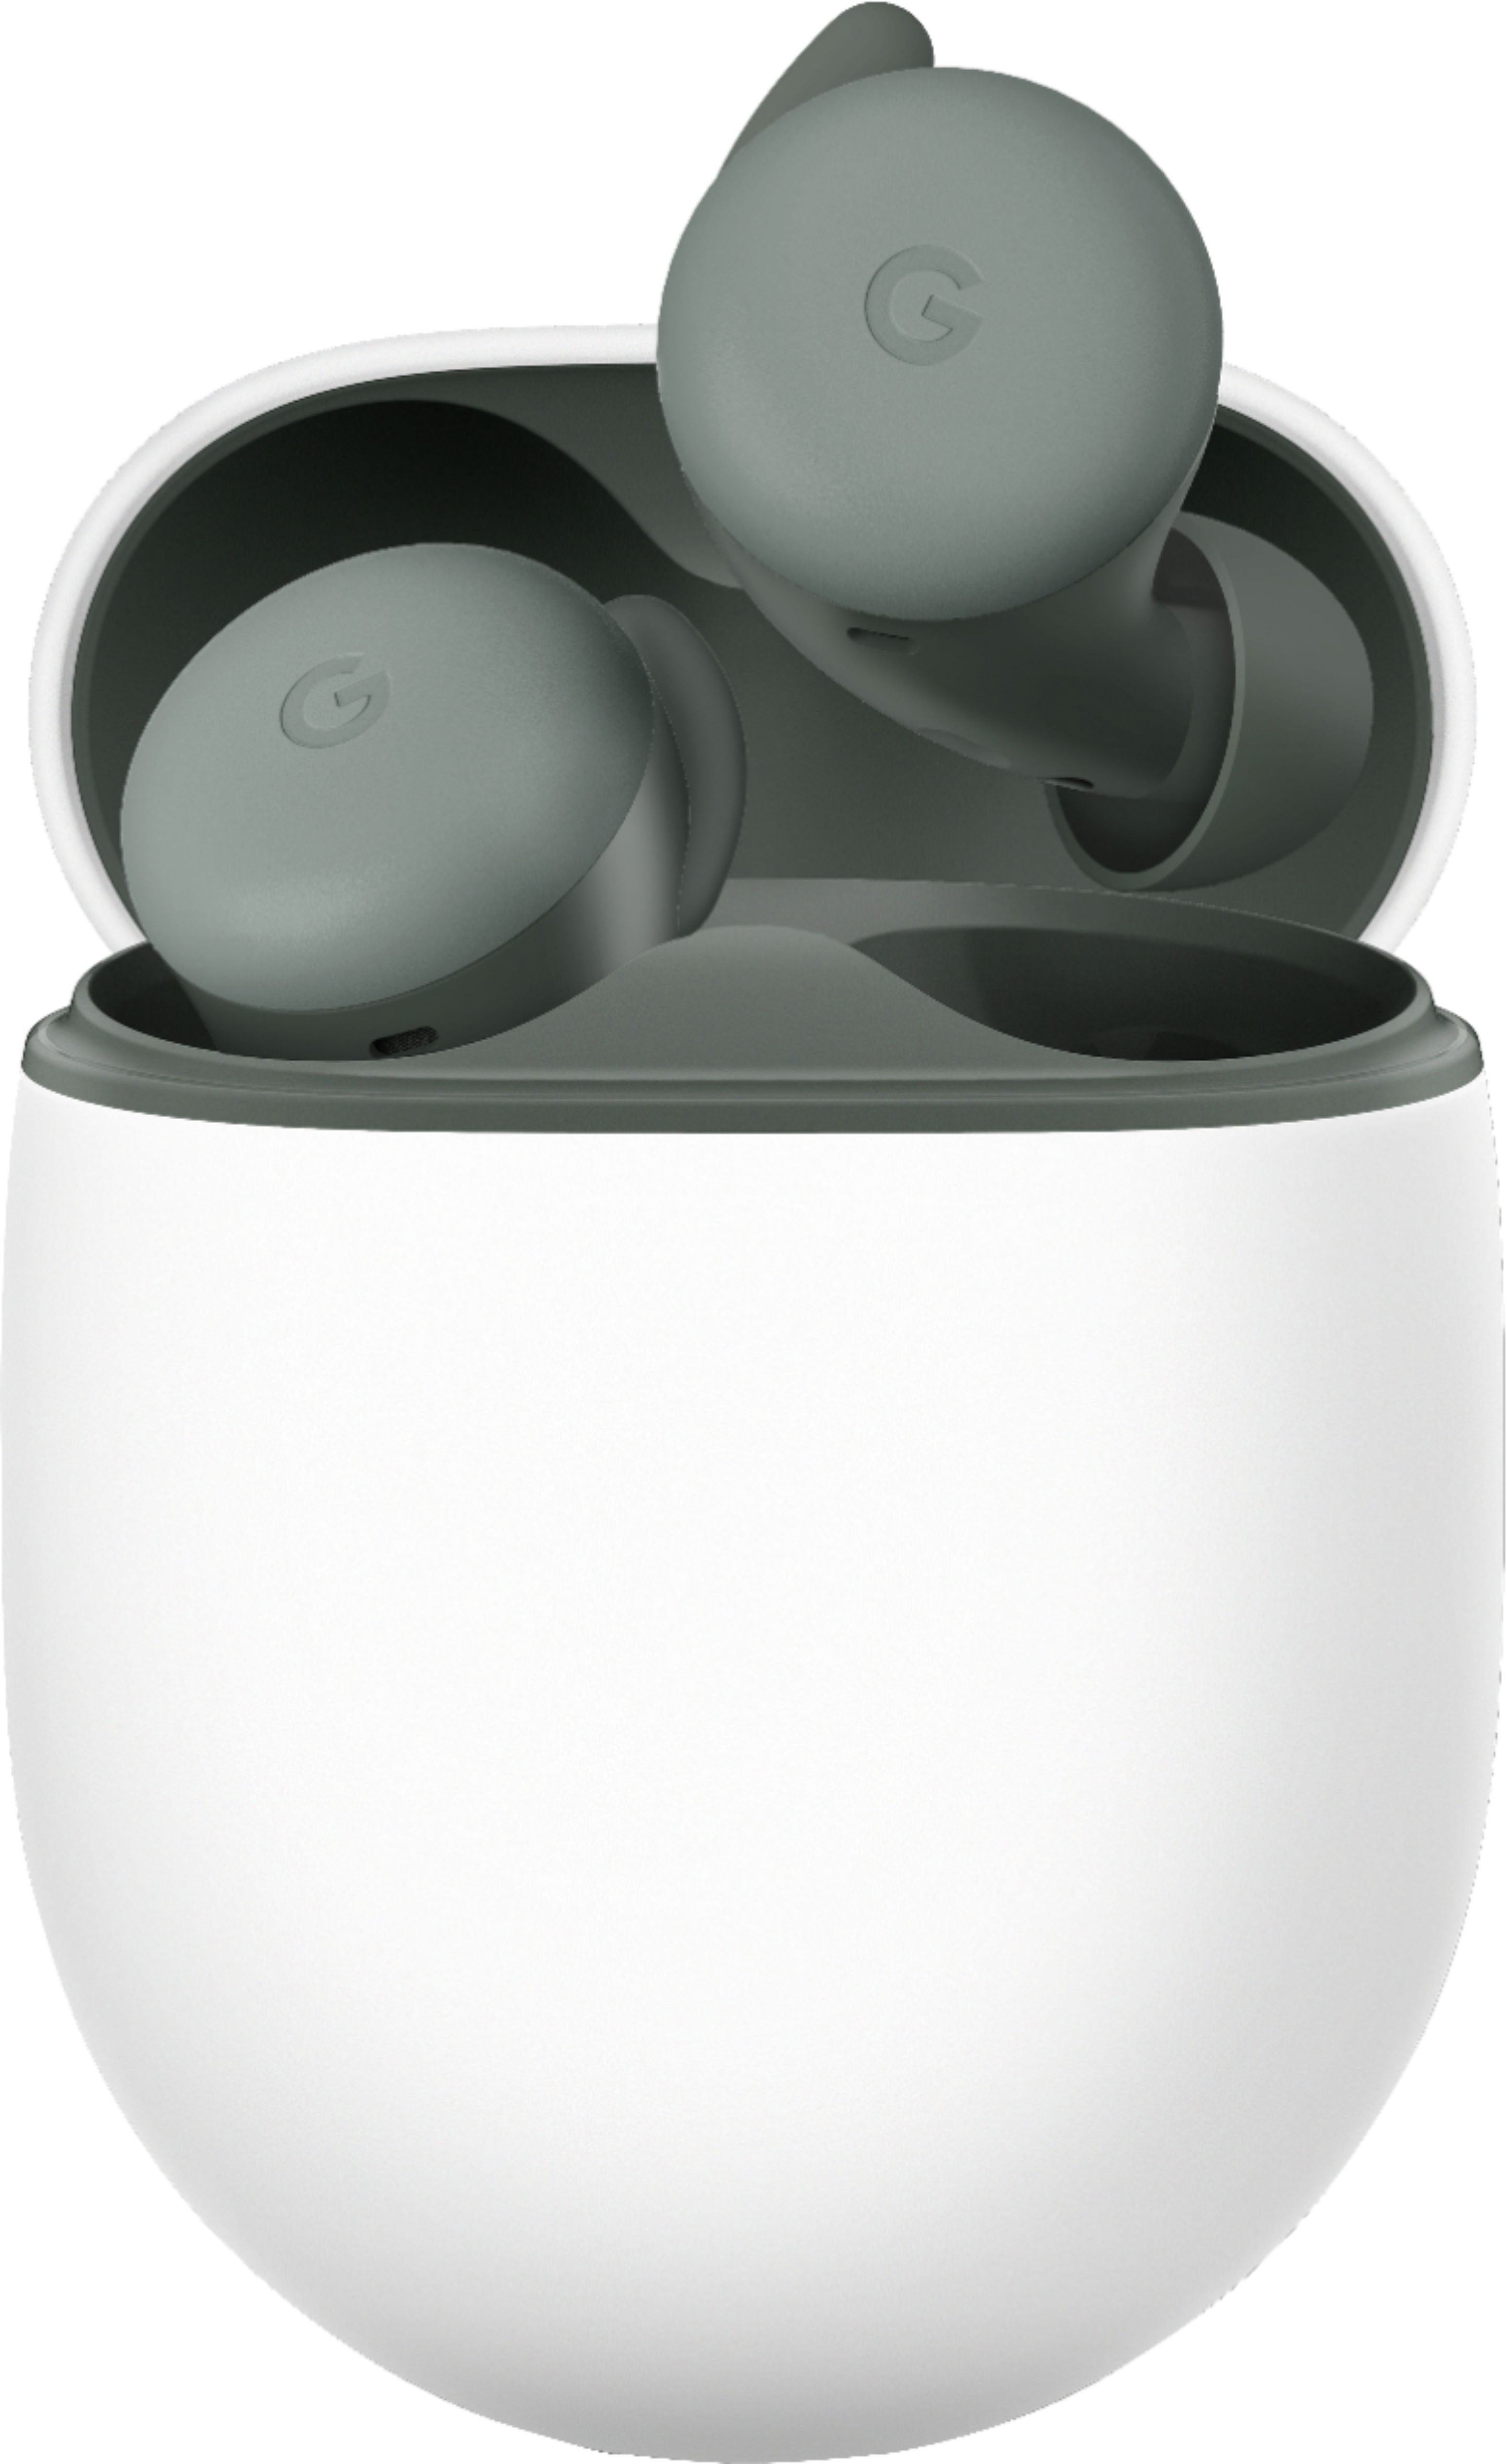 Zoom in on Front Zoom. Google - Pixel Buds A-Series True Wireless In-Ear Headphones - Olive.